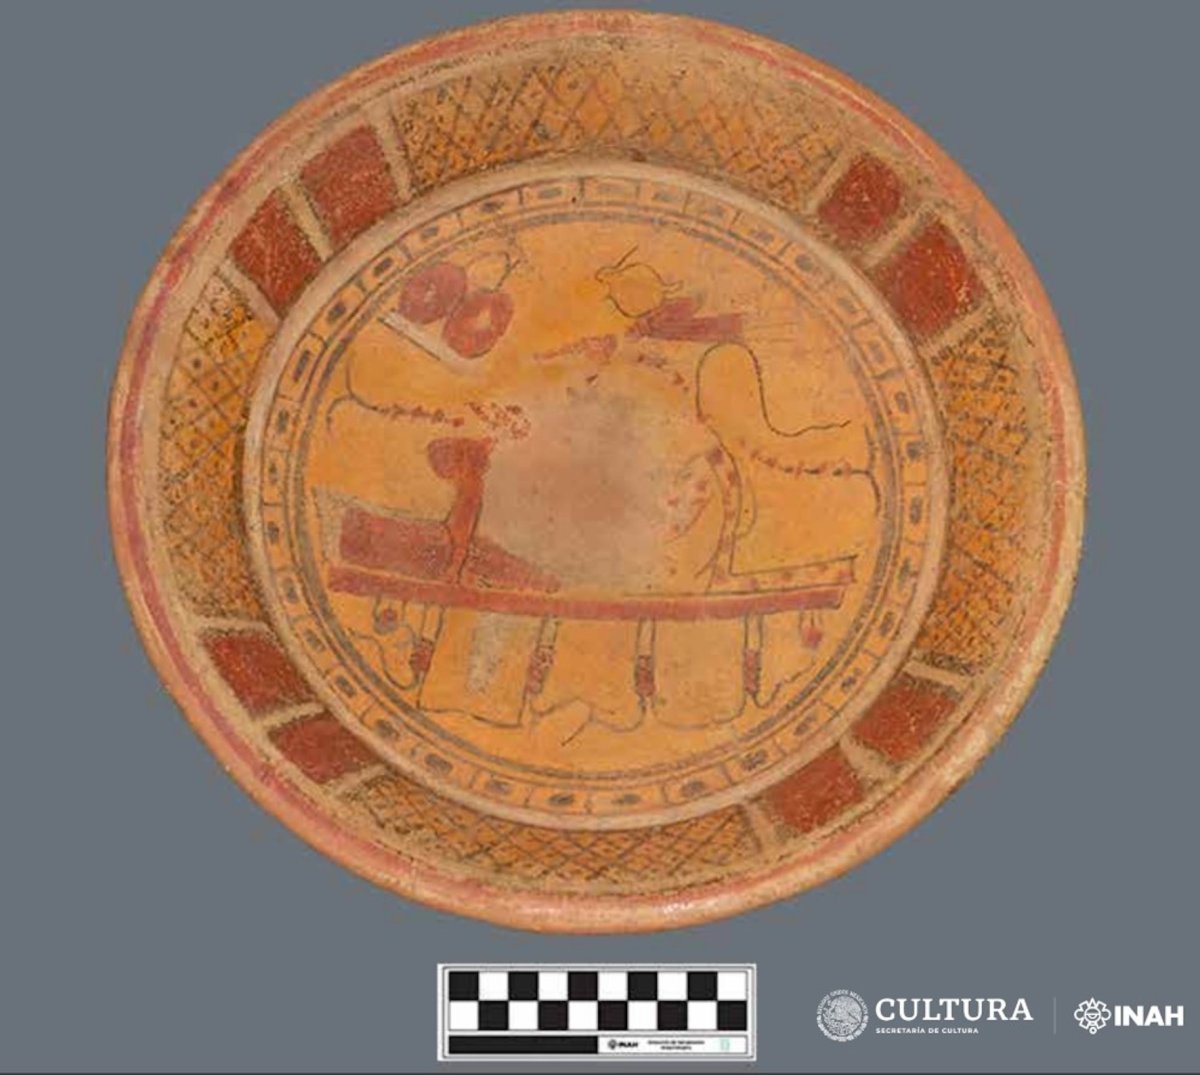 An ancient Maya ceramic dish